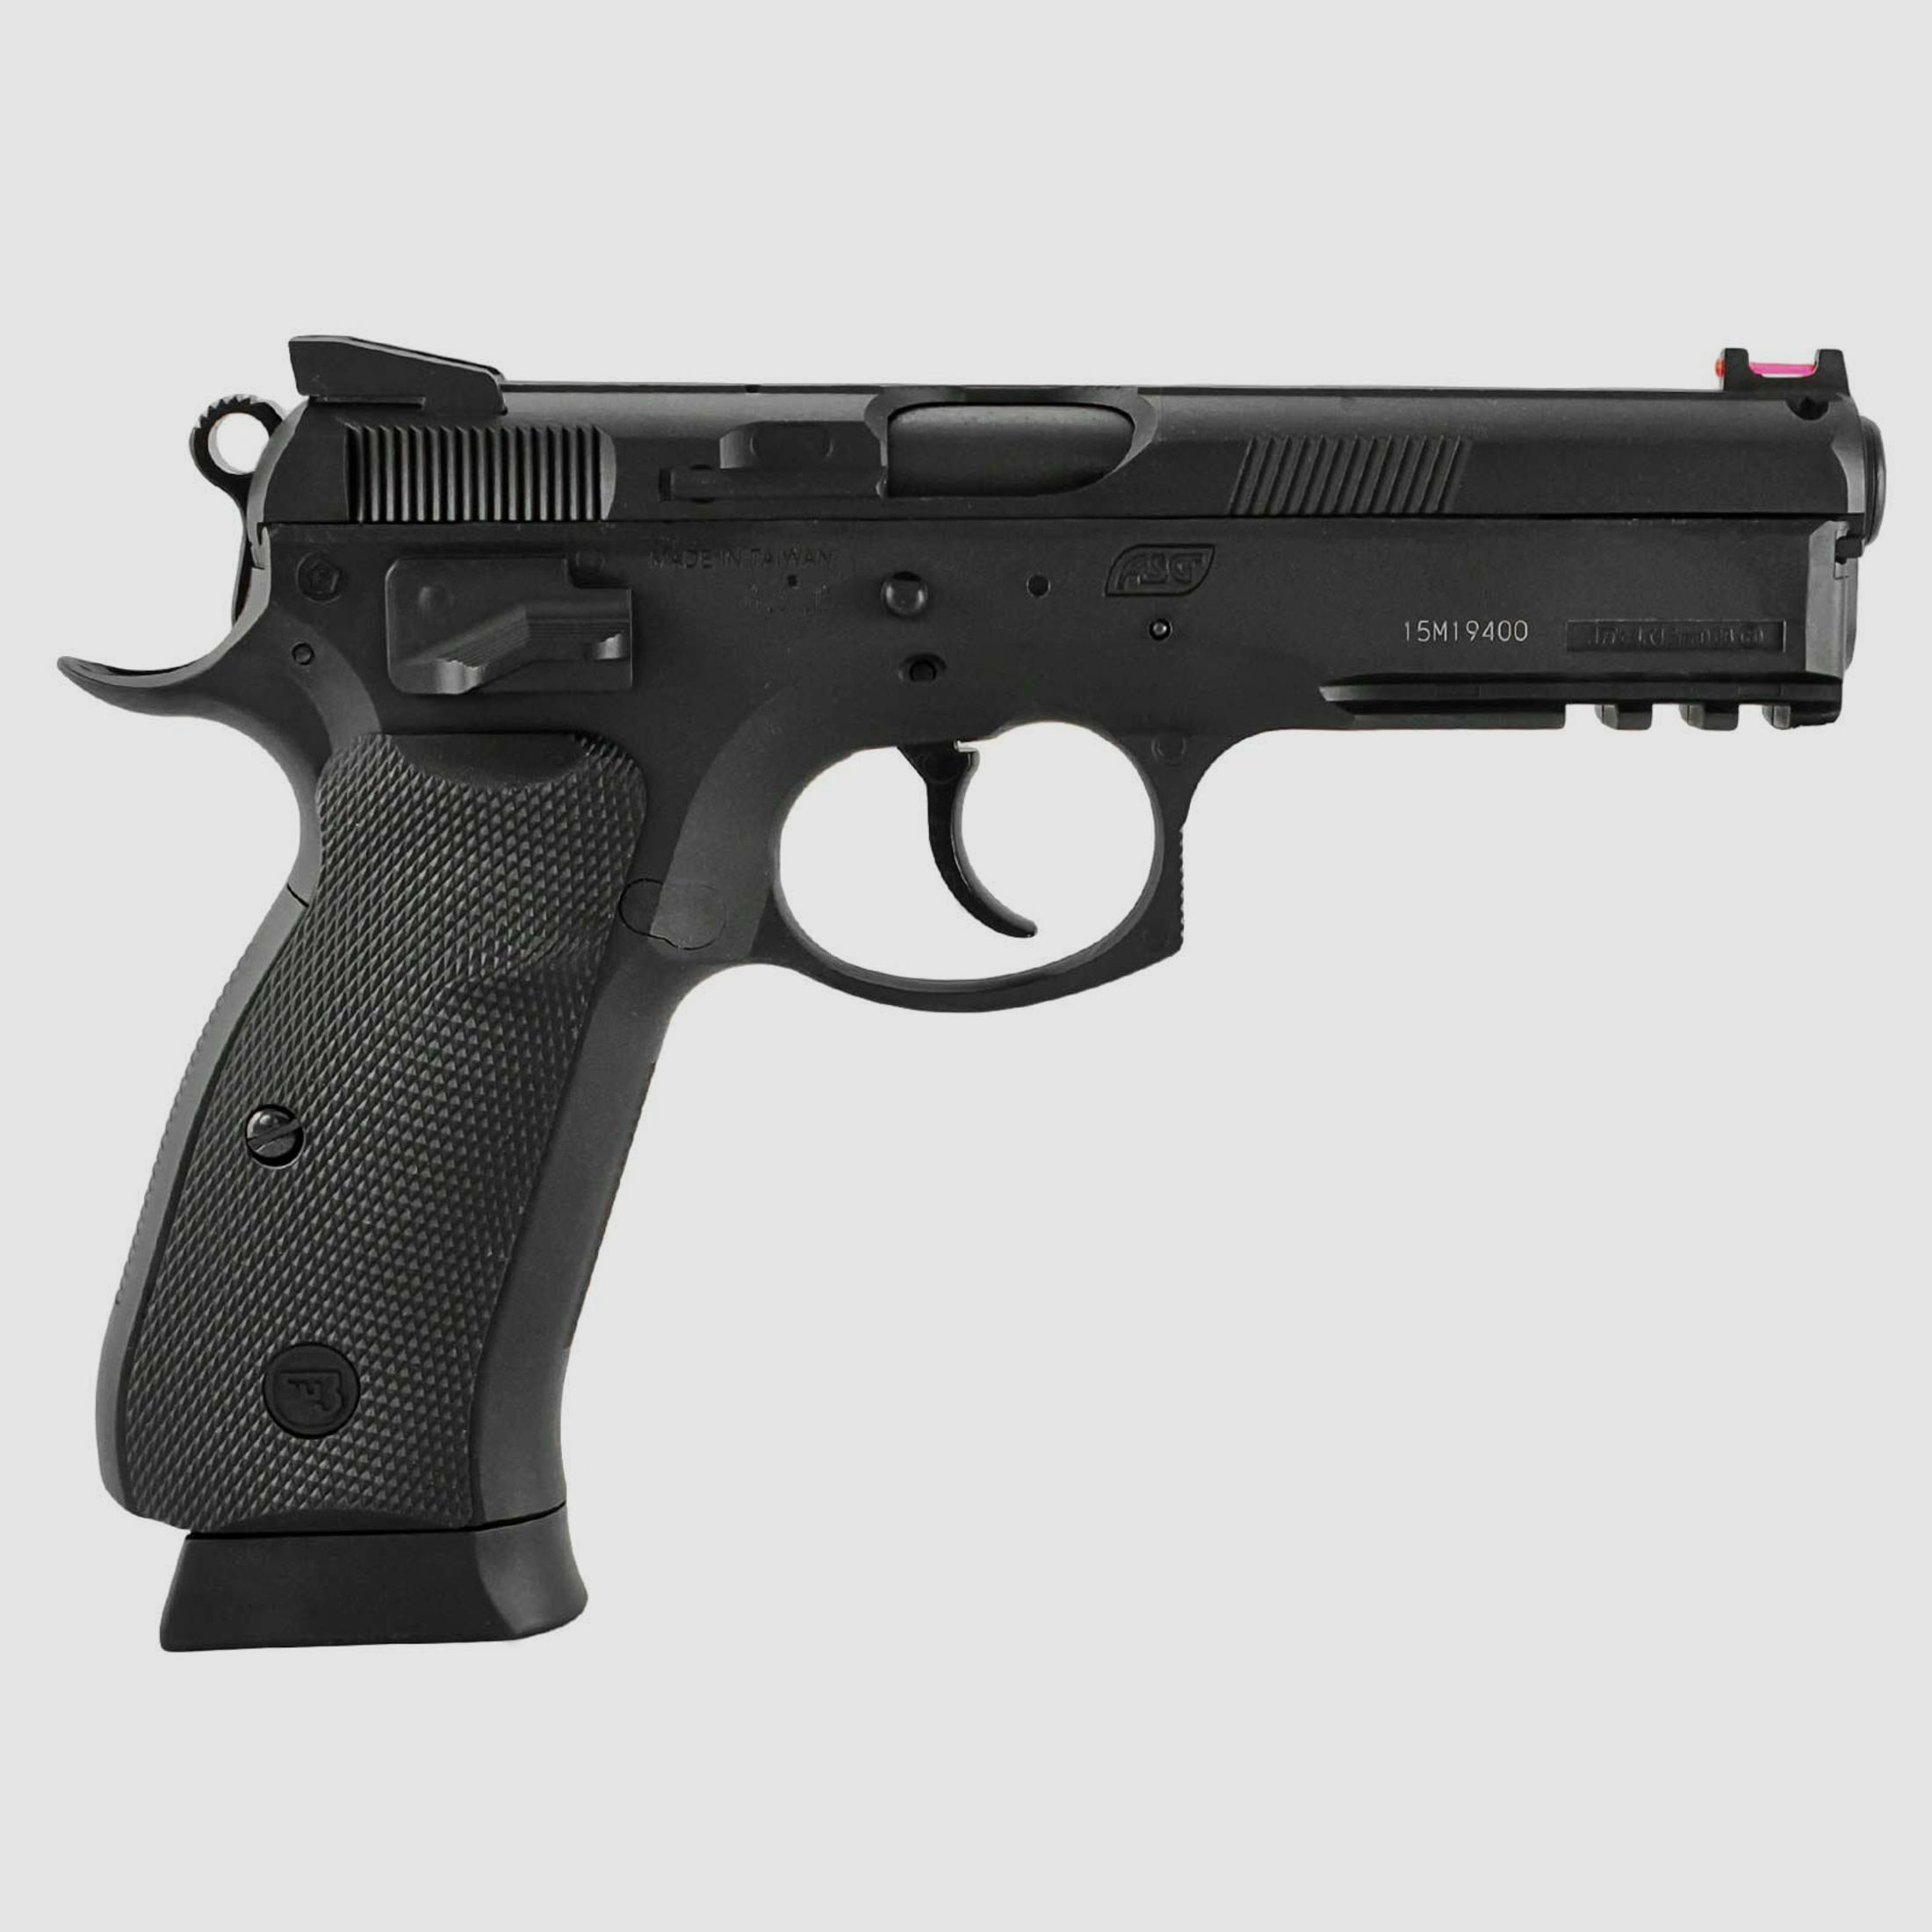 Luftpistolenset CZ SP-01 Shadow Co2-Pistole Kaliber 4,5 mm Stahl BB (P18) + 10 Co2-Kapseln + 1500 Stahl-BB's 4komma5